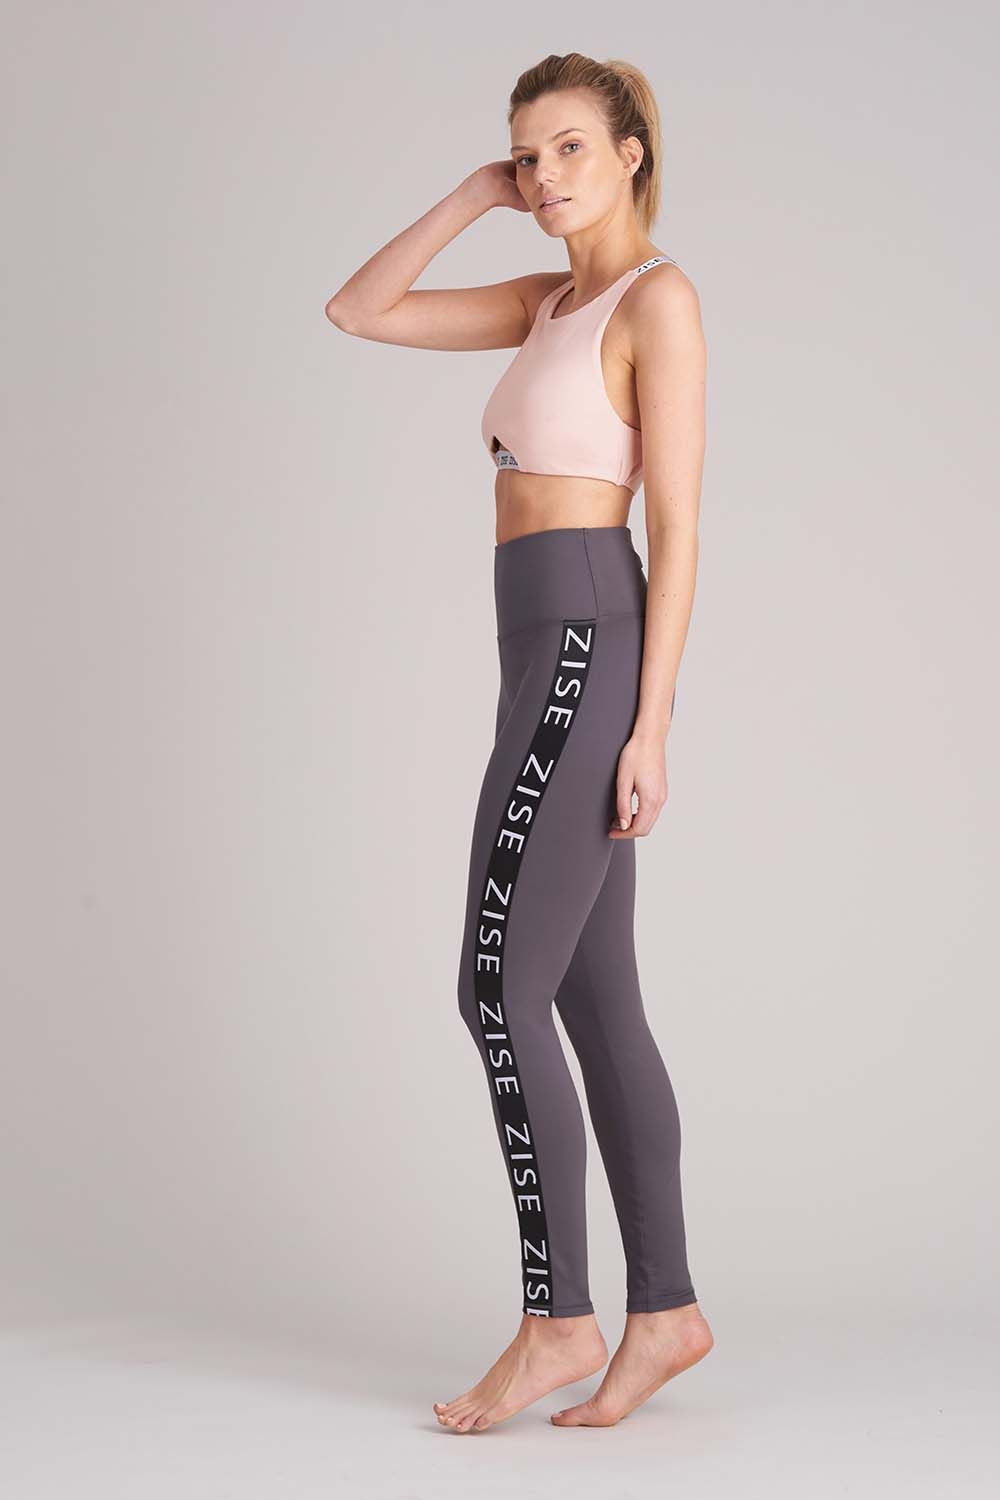 DKNY Women's Tummy Control Workout Yoga Leggings, Black with Two Tone Logo  Side Tape, XS